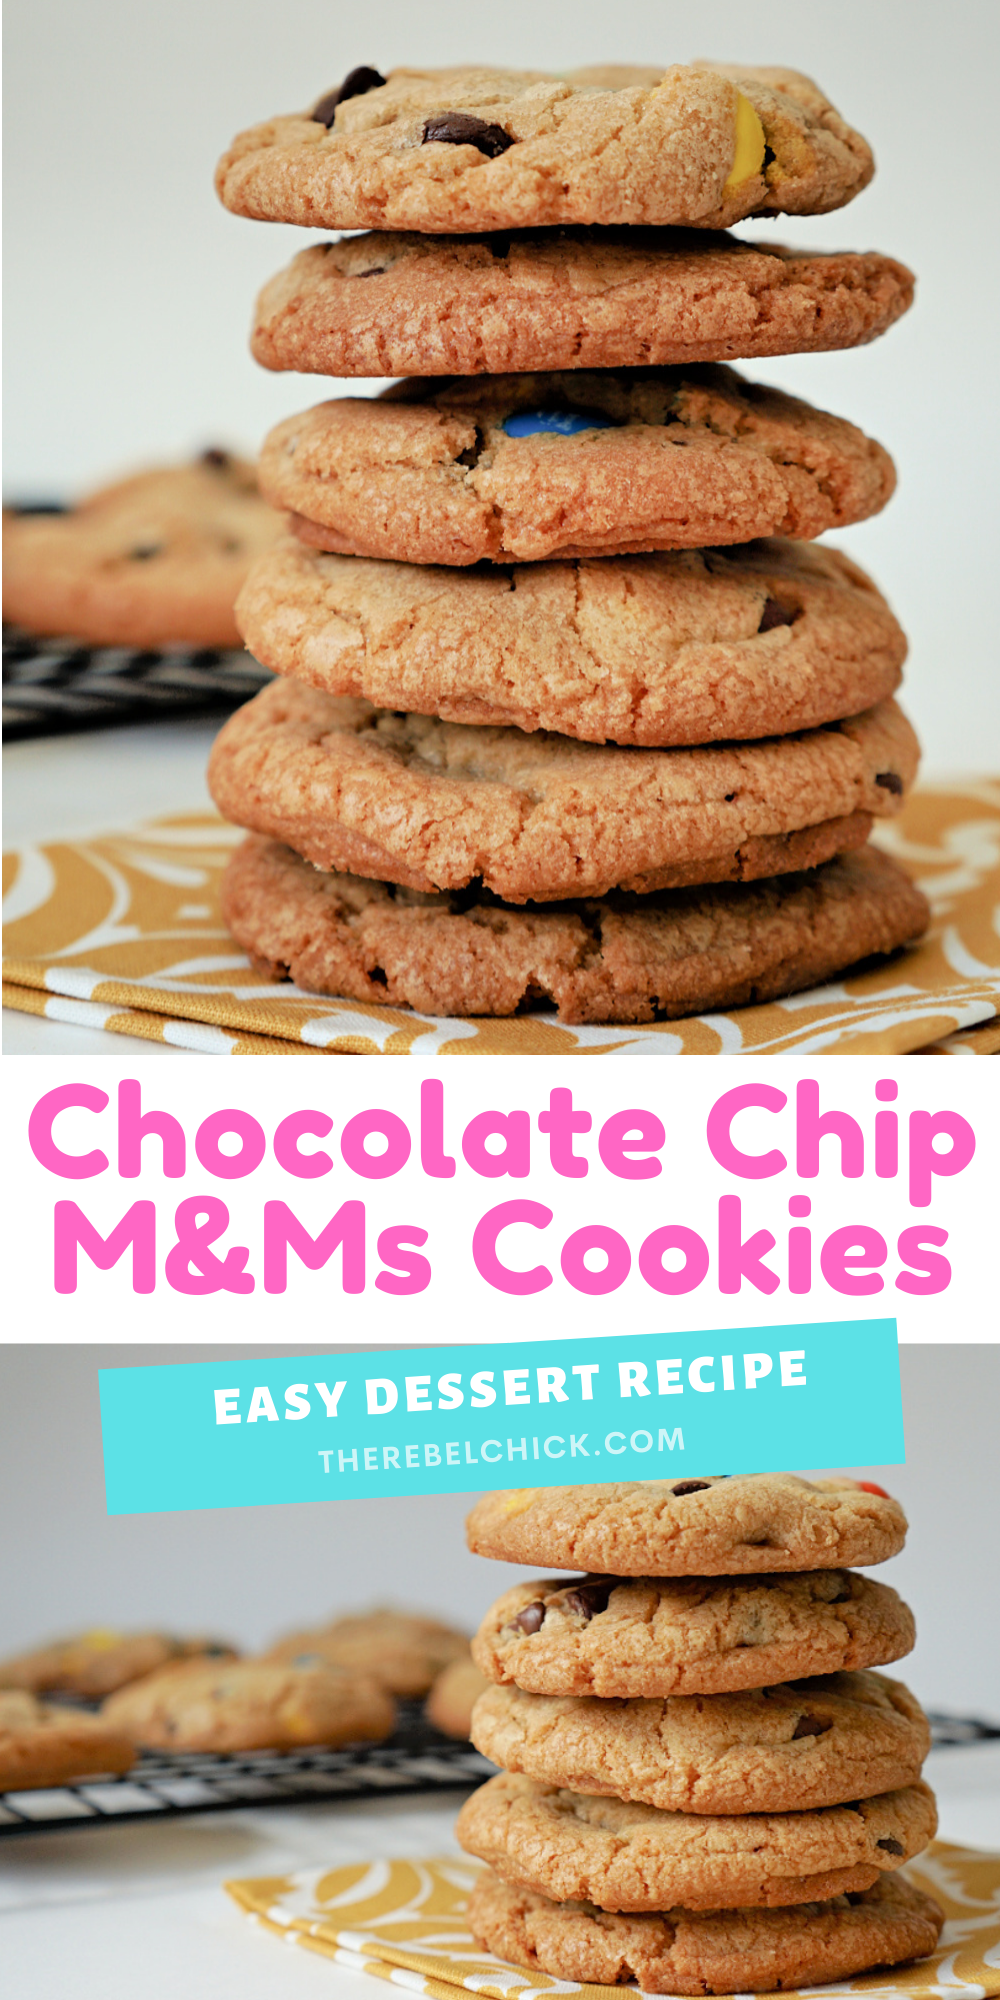 Chocolate Chip M&M's Cookies